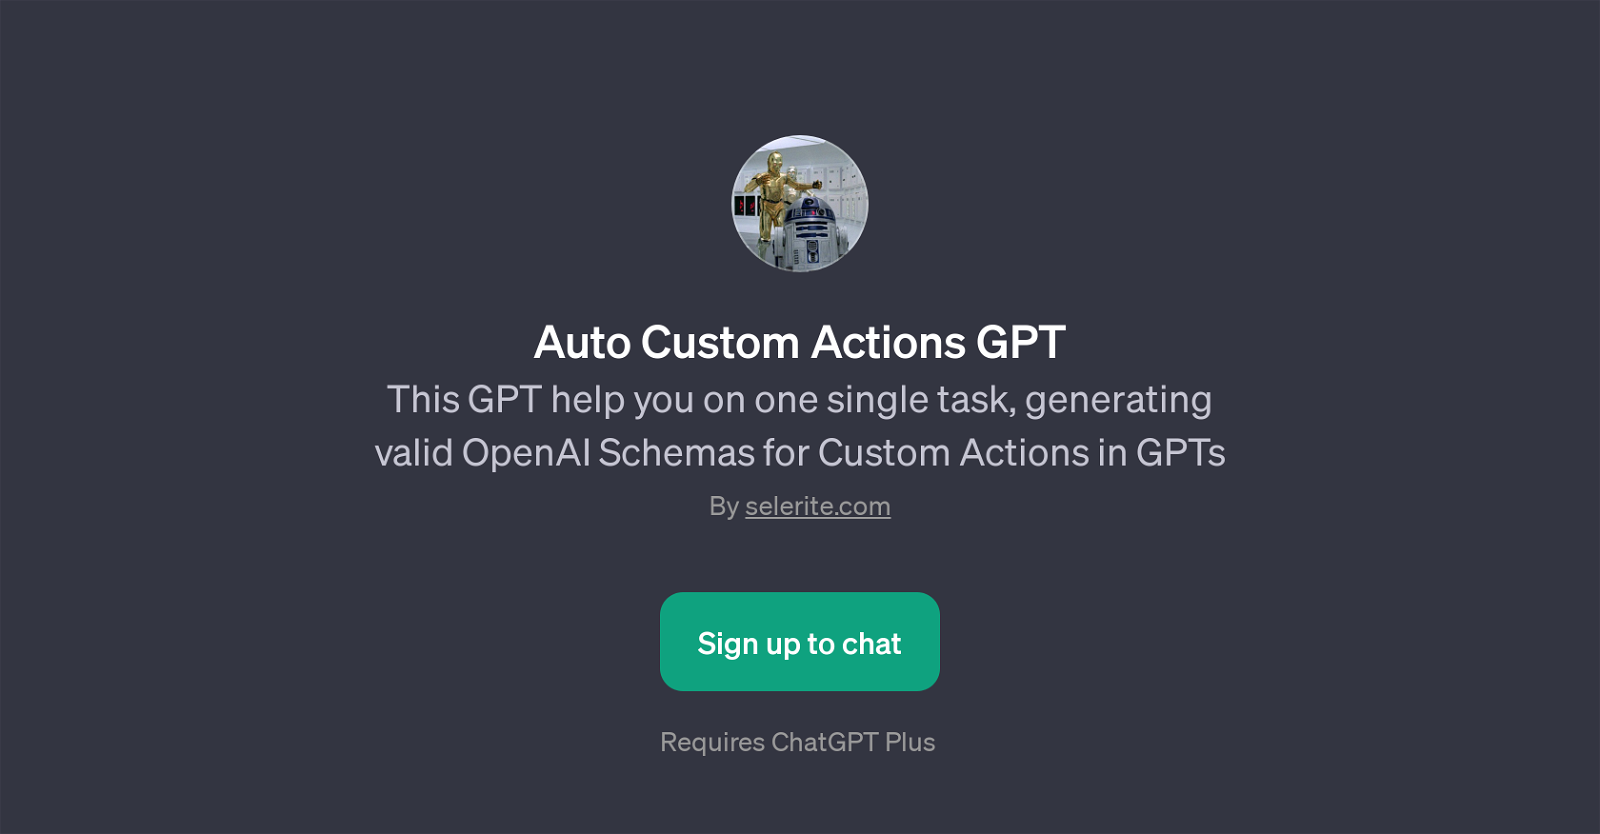 Auto Custom Actions GPT website